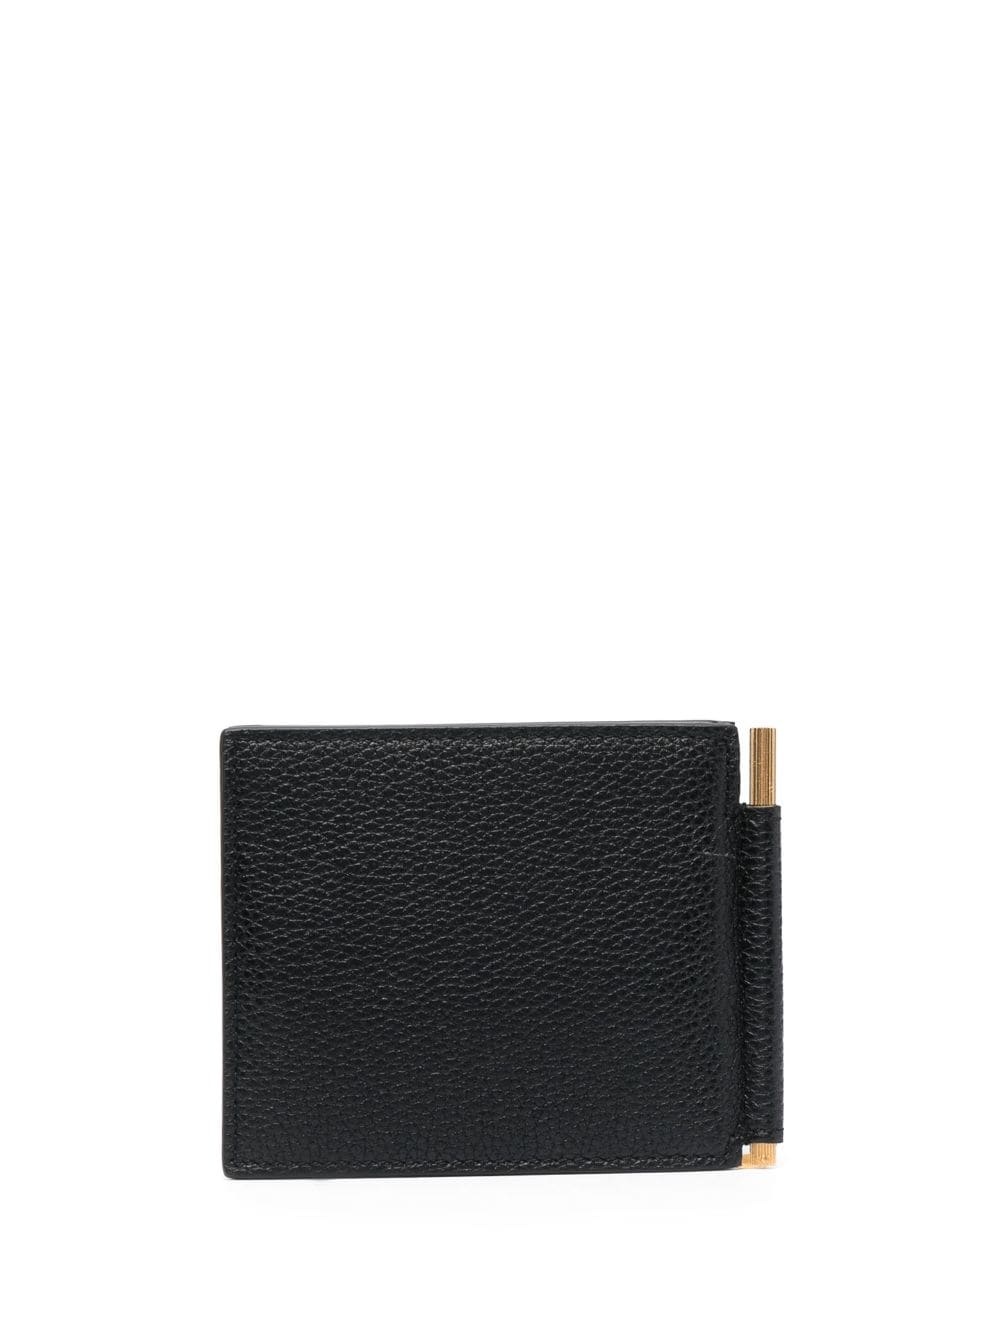 money clip leather wallet - 3